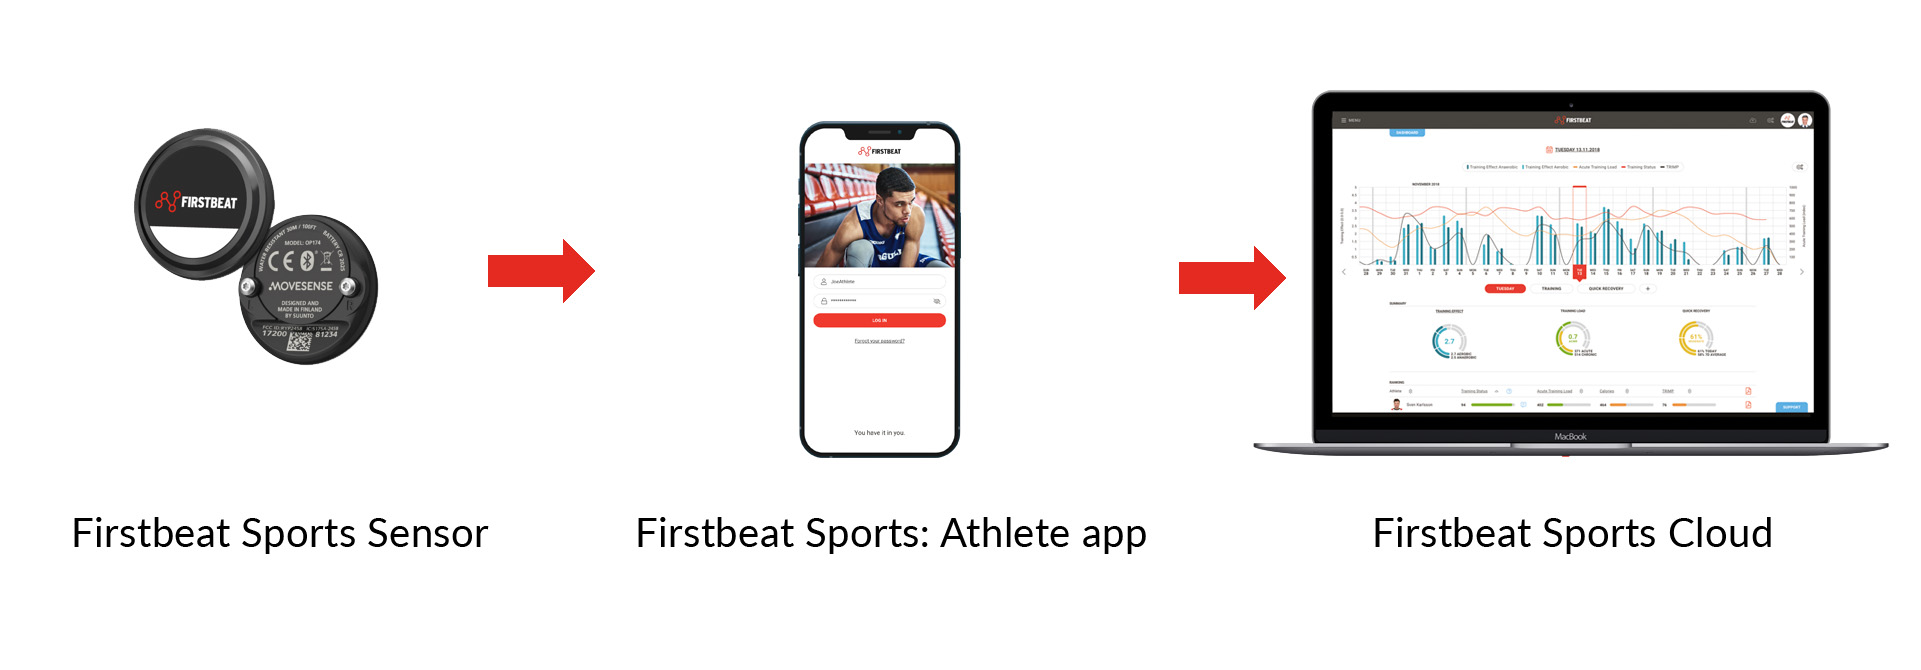 FirstbeatSports-HowtoDownloadDatafromSensors-Athleteapp.jpg